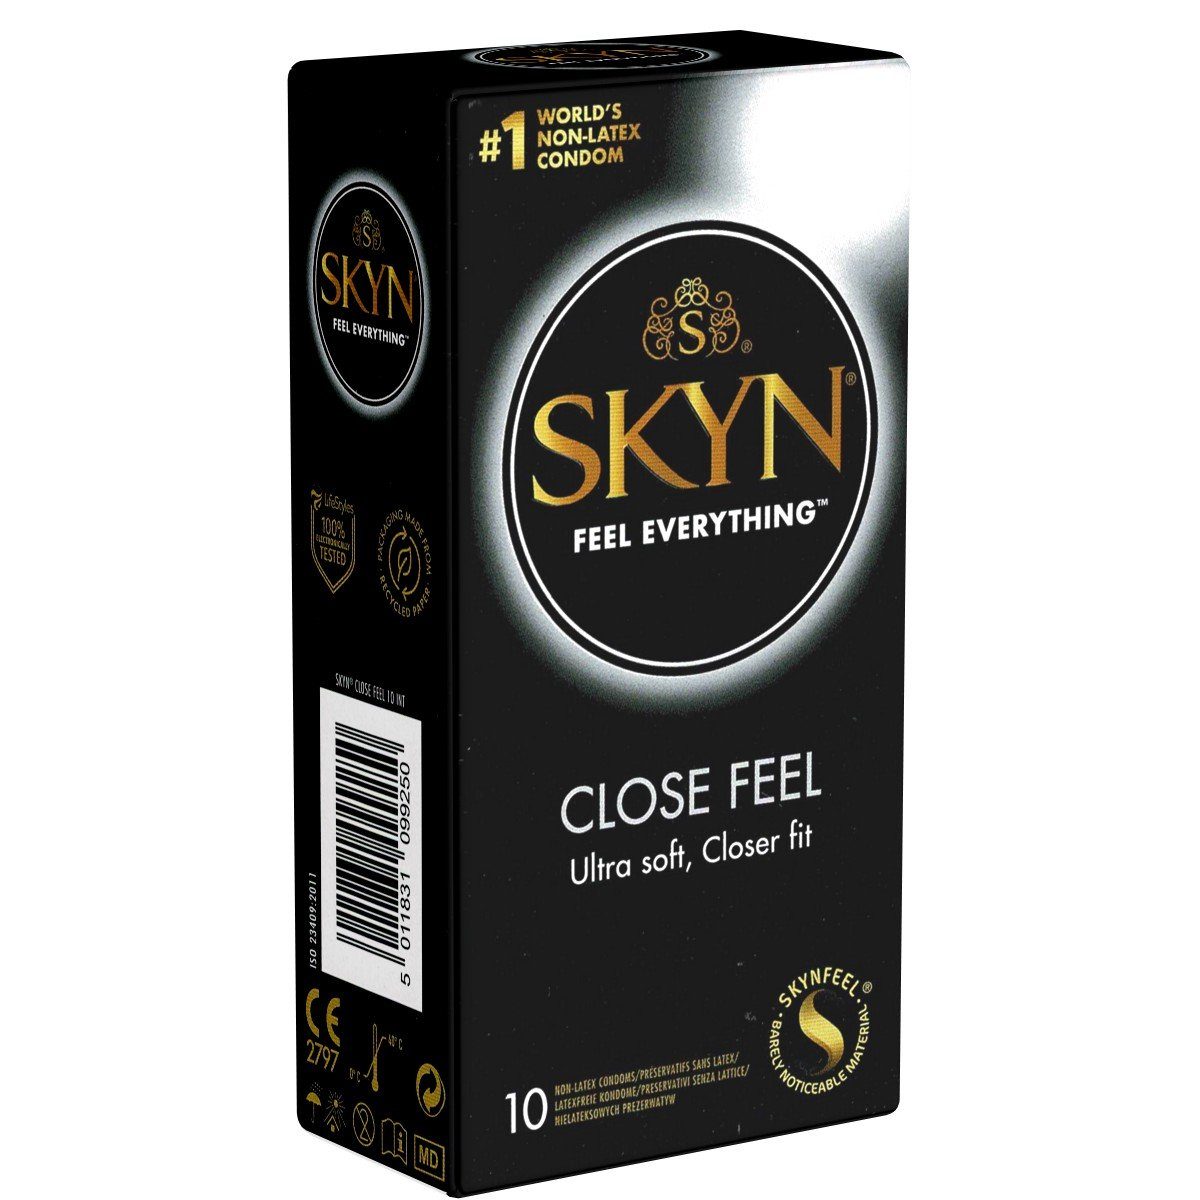 SKYN Kondome Close Feel (Ultra Soft, Closer Fit) Packung mit, 10 St., enge latexfreie Kondome aus Sensoprène™